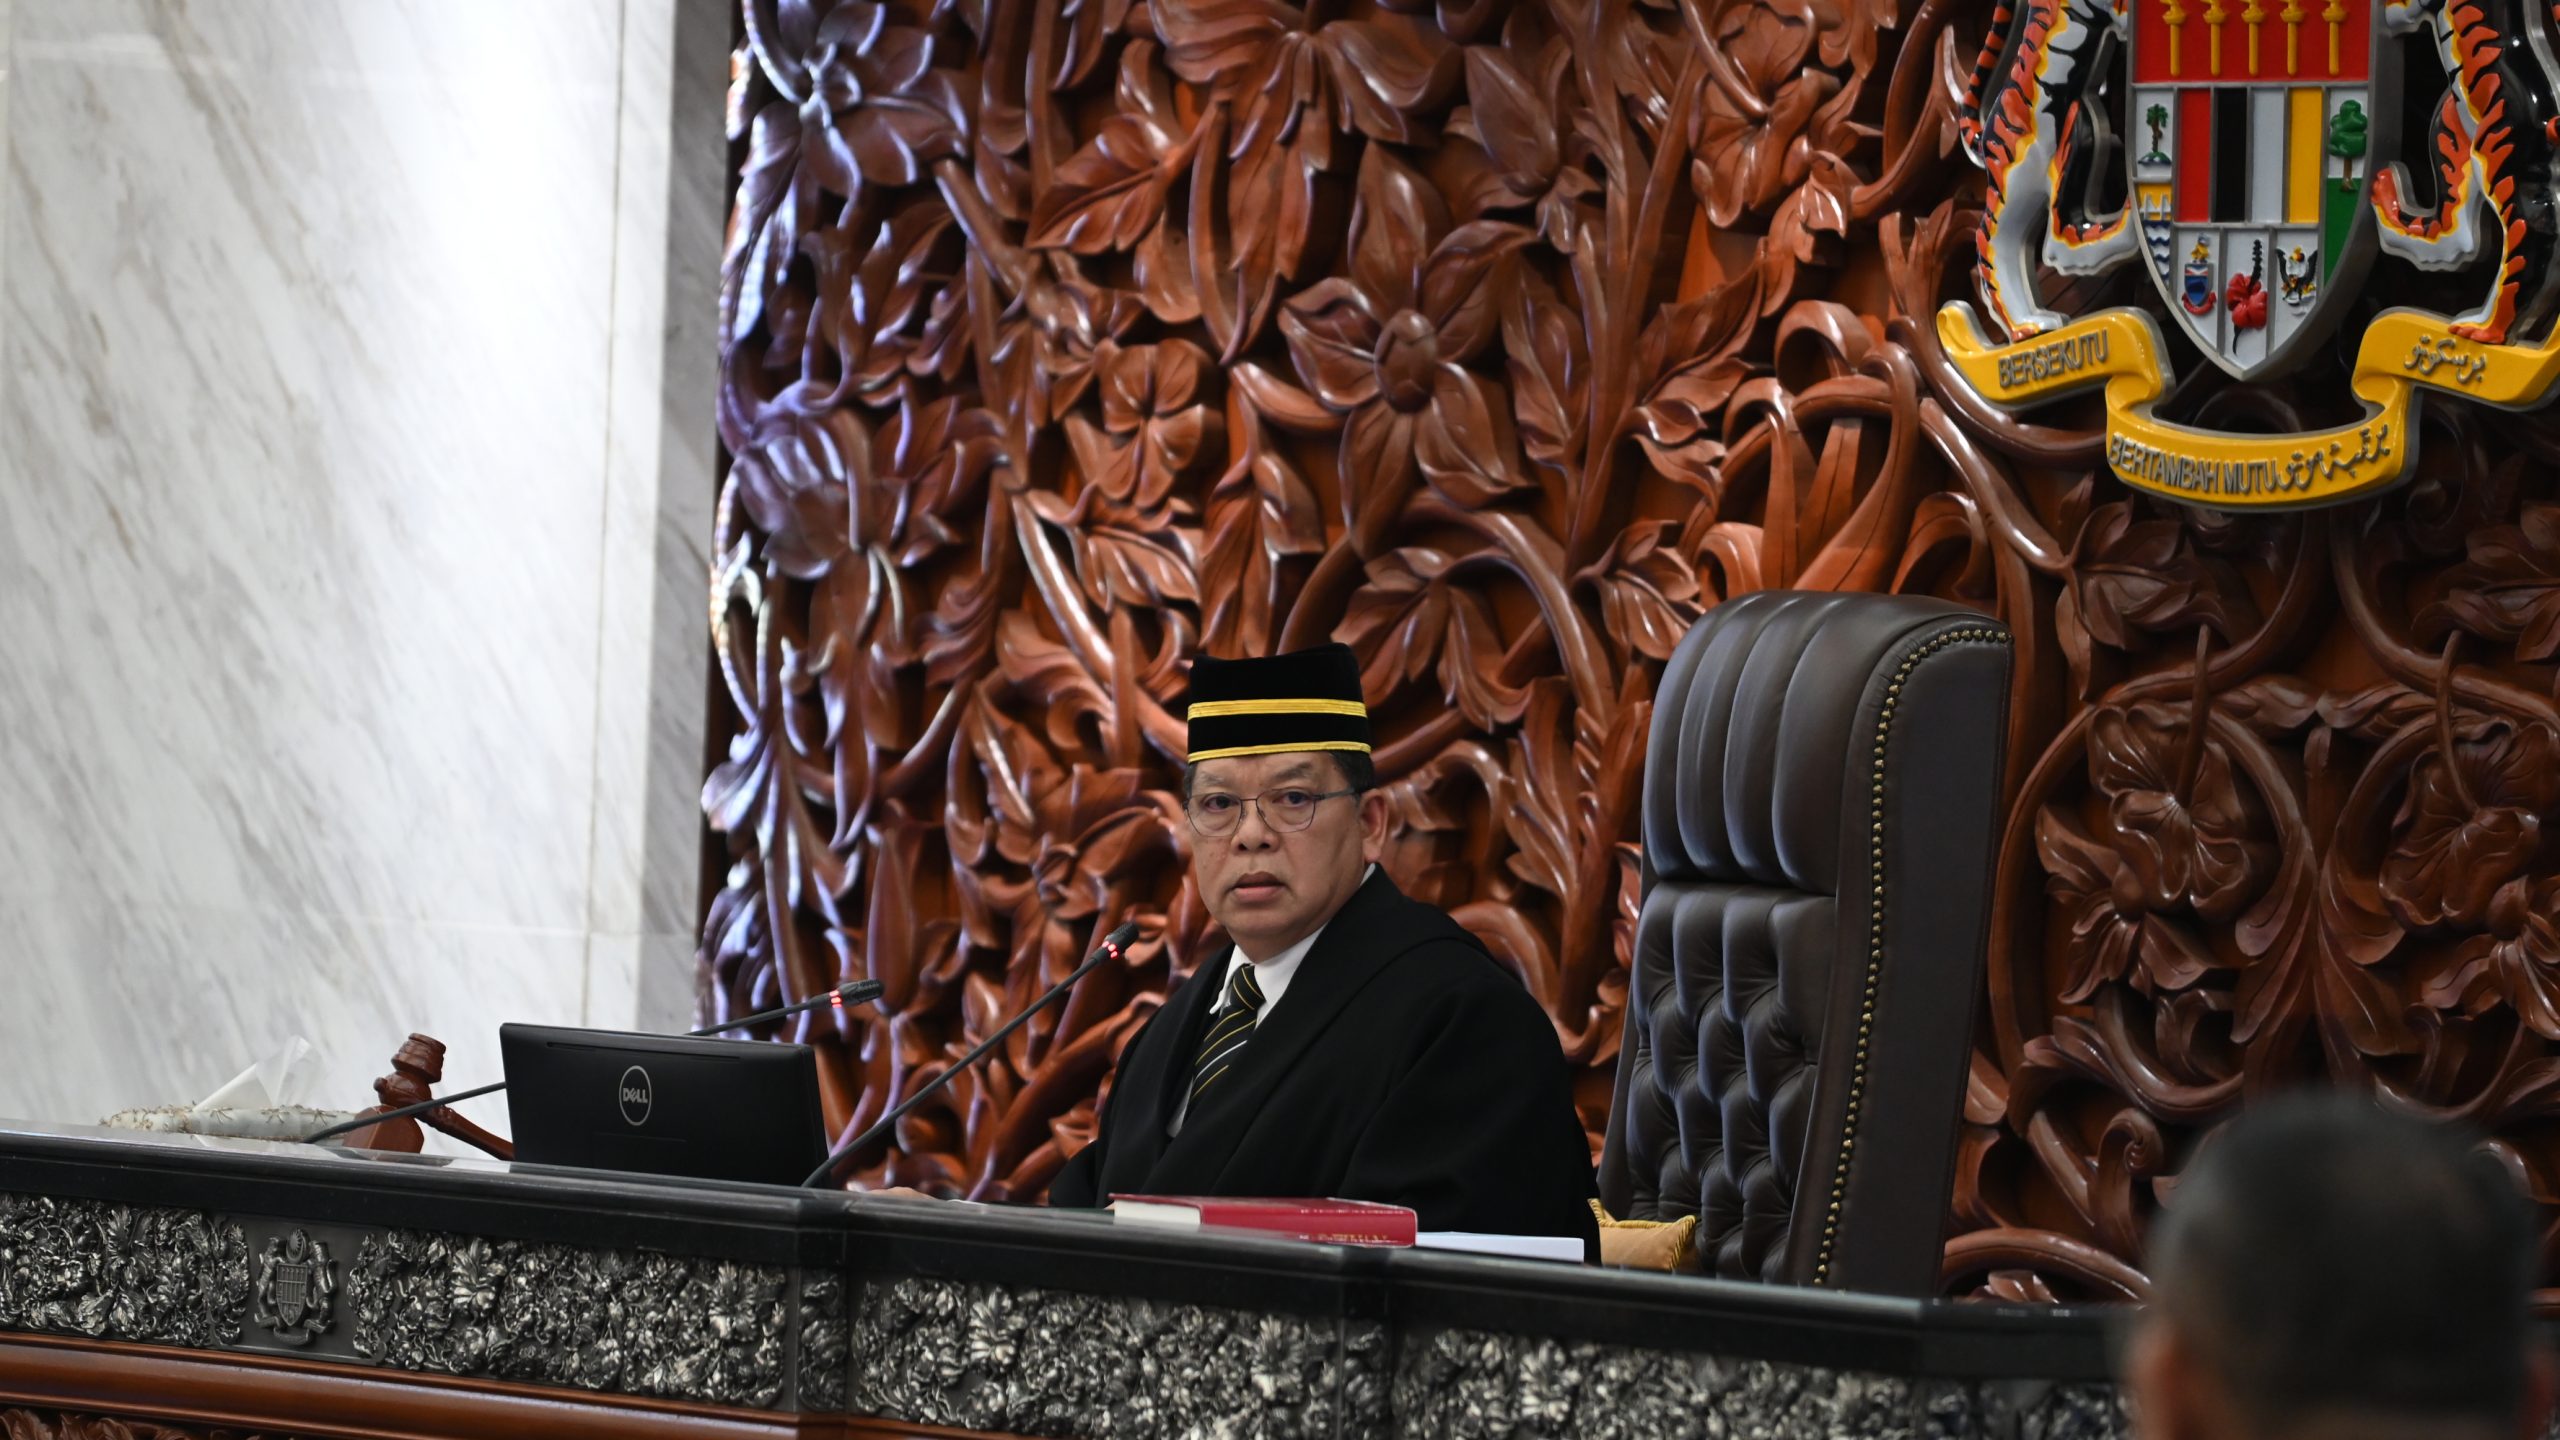 Write to me on any seating changes in Dewan, speaker tells Bersatu MPs backing Anwar